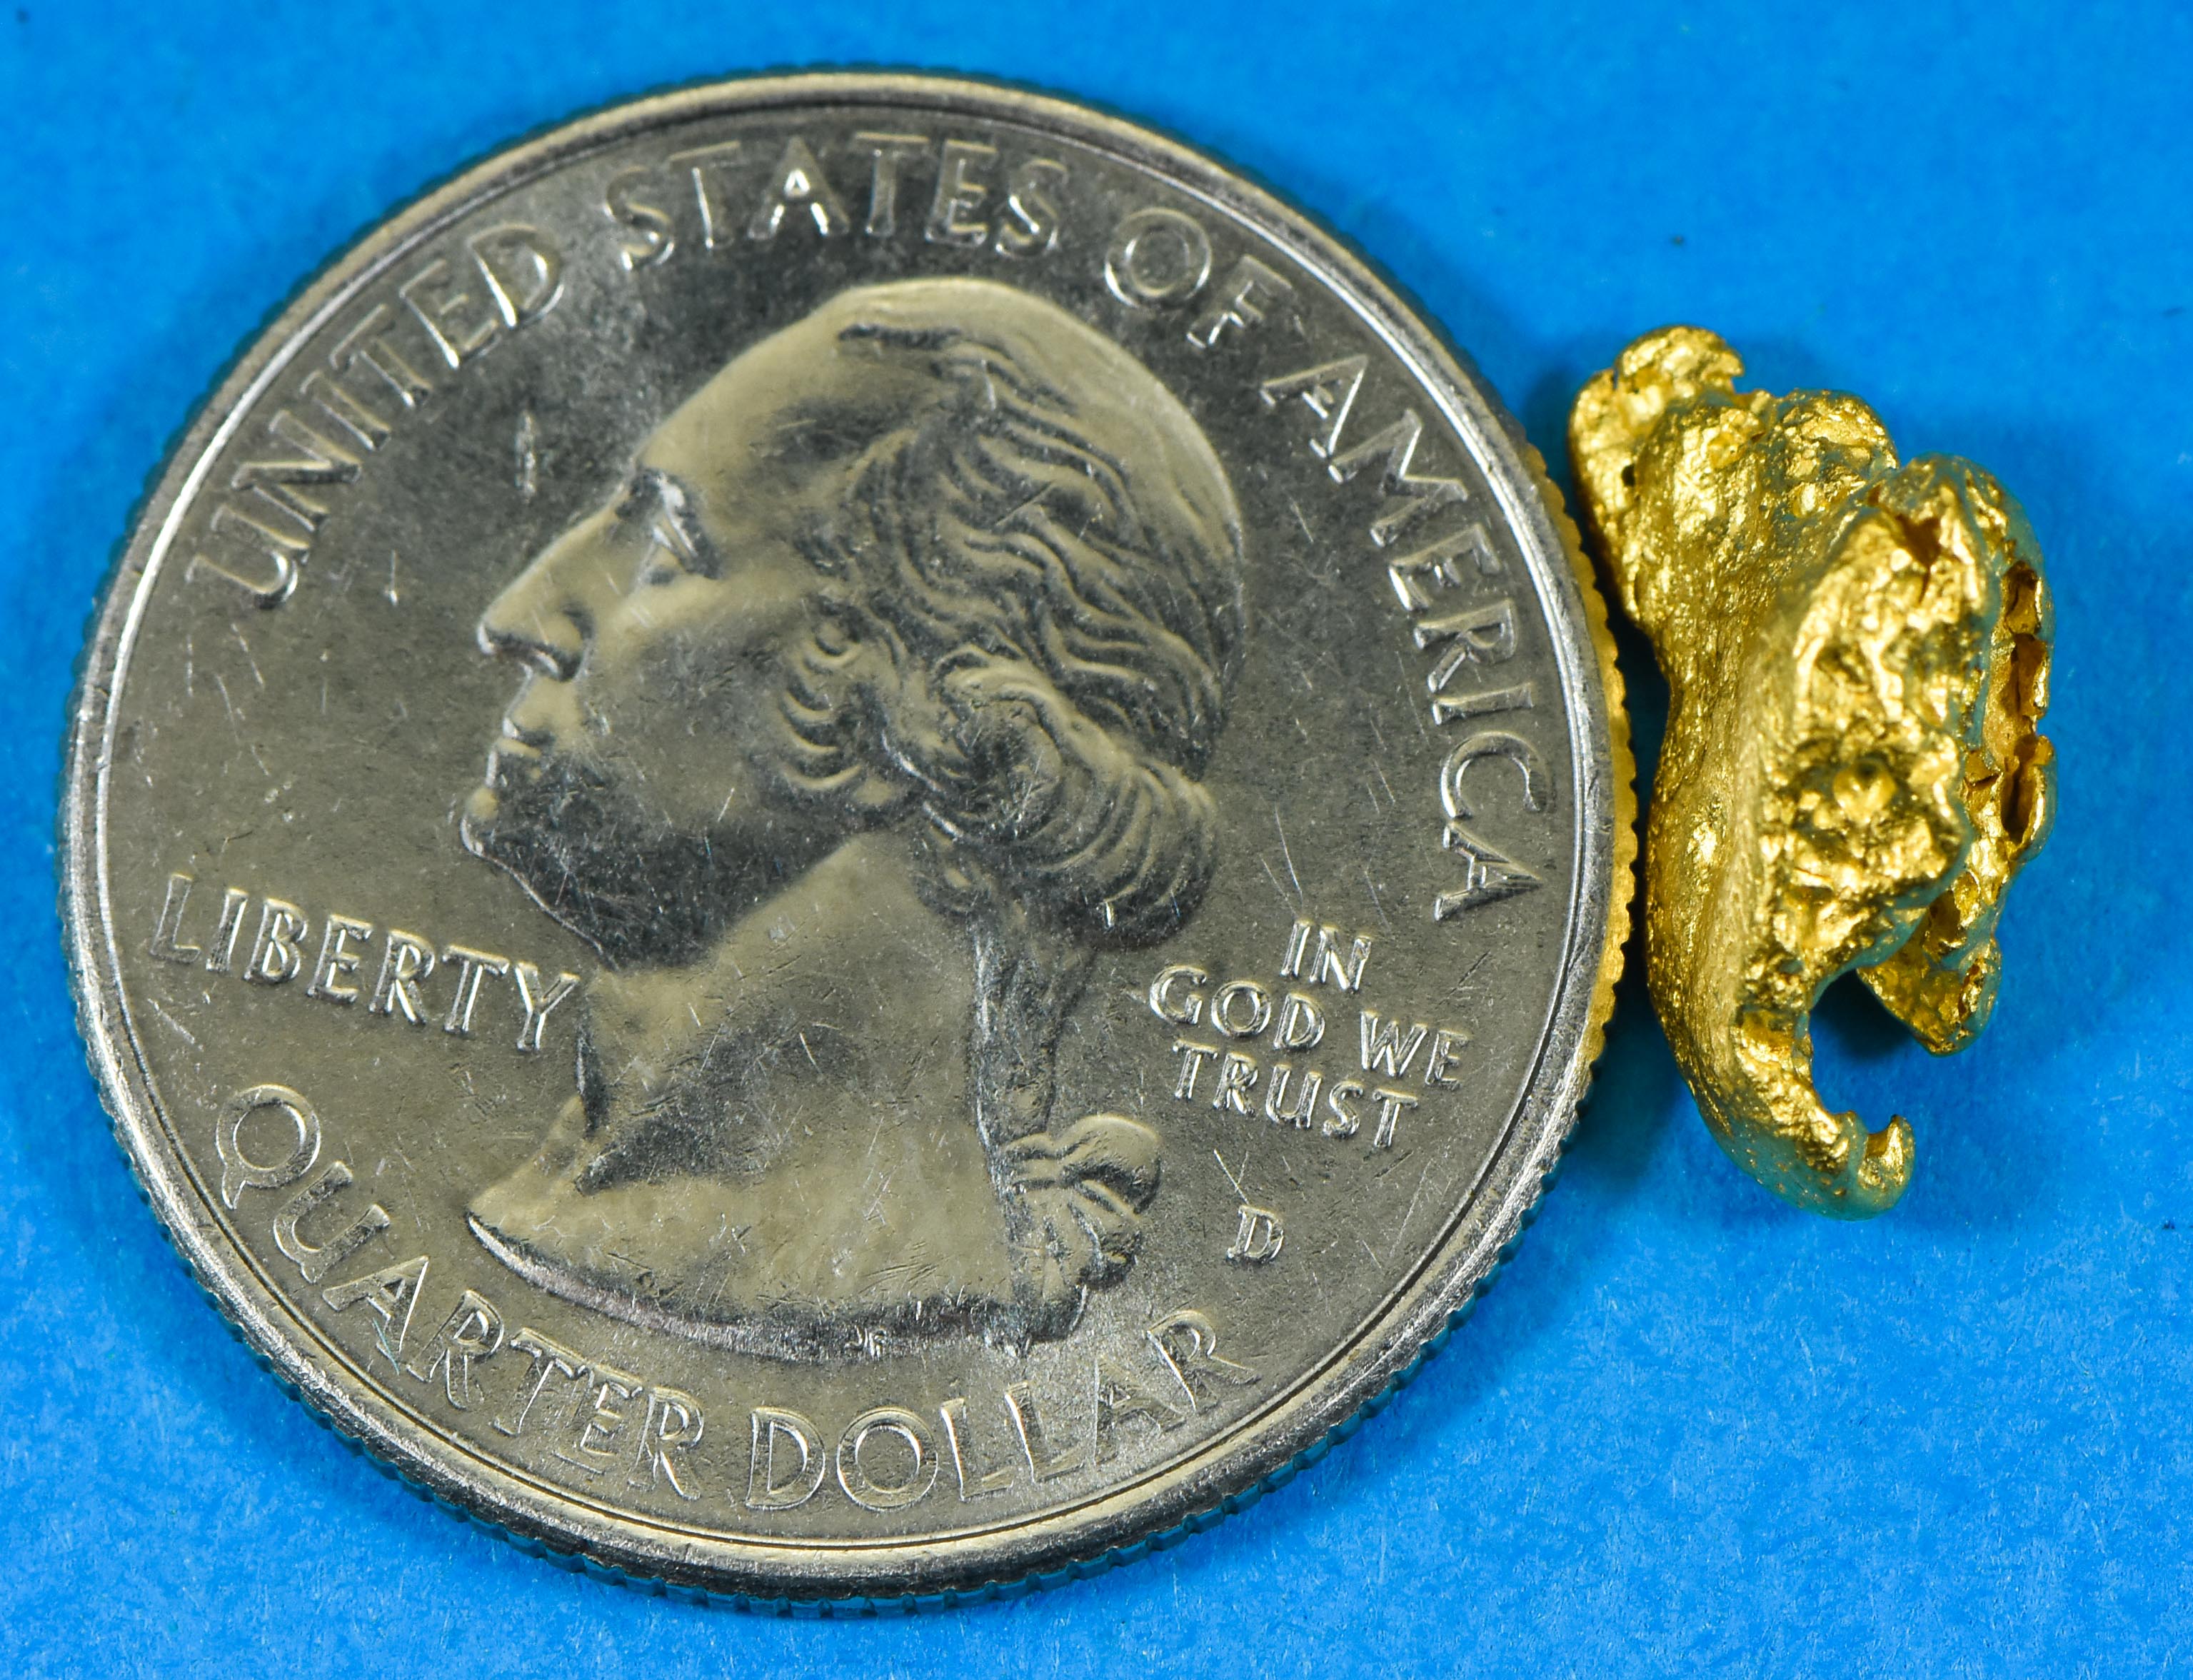 #1047 Natural Gold Nugget Australian 2.92 Grams Genuine